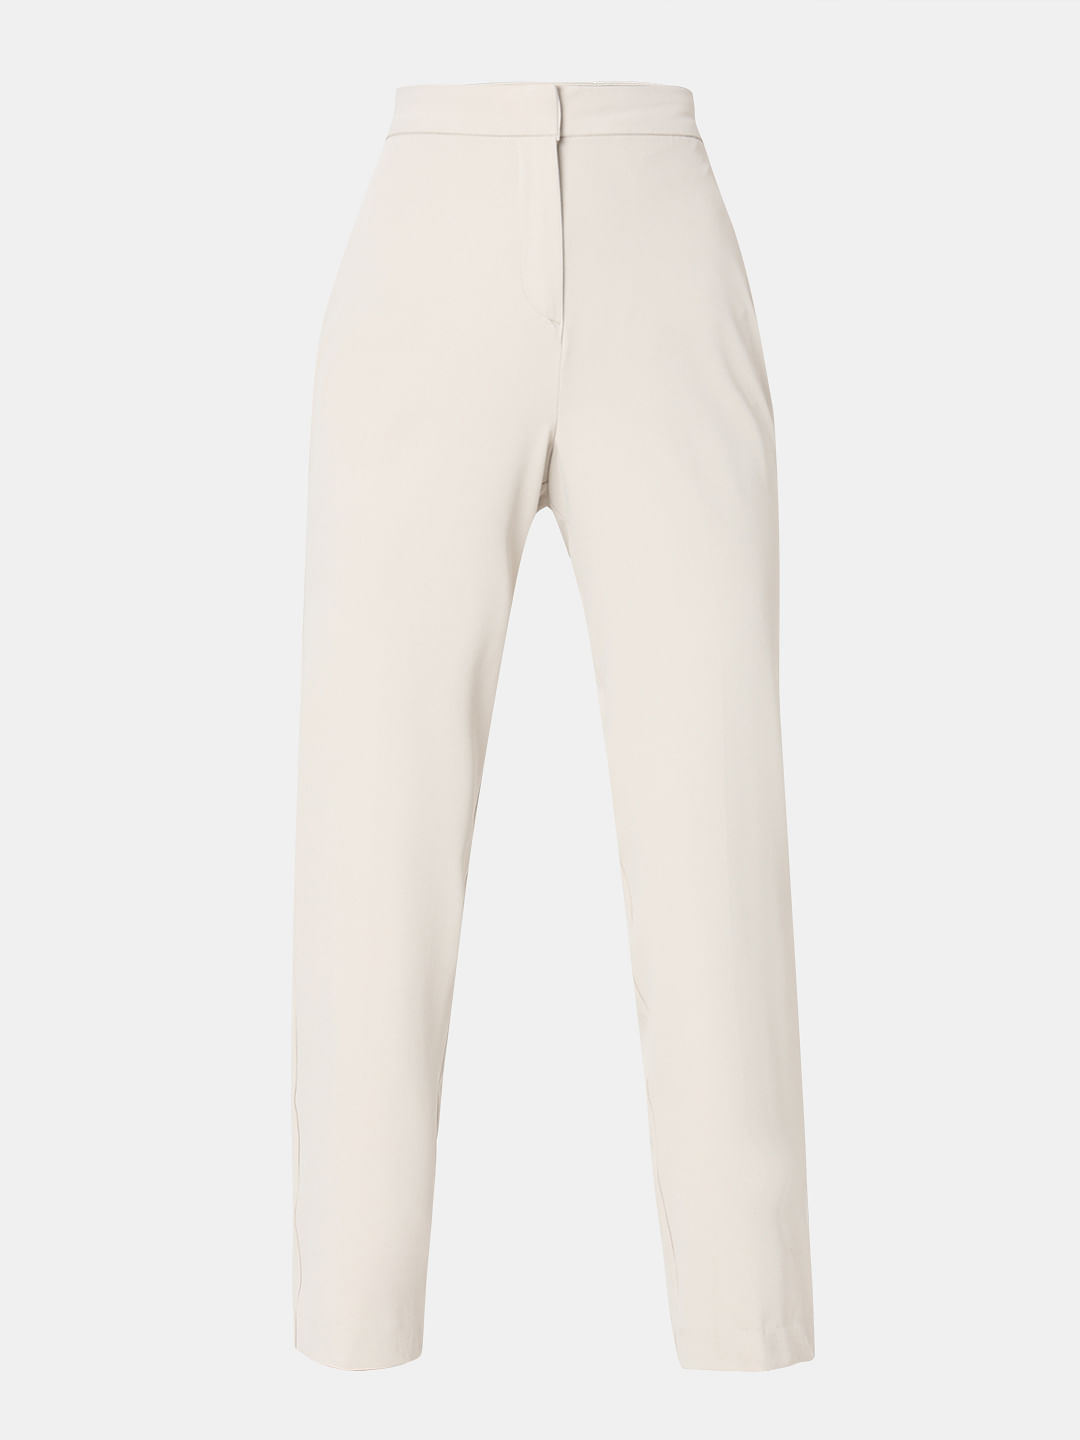 Reiss Theo Tapered Trousers, Cream | £128.00 | Buchanan Galleries